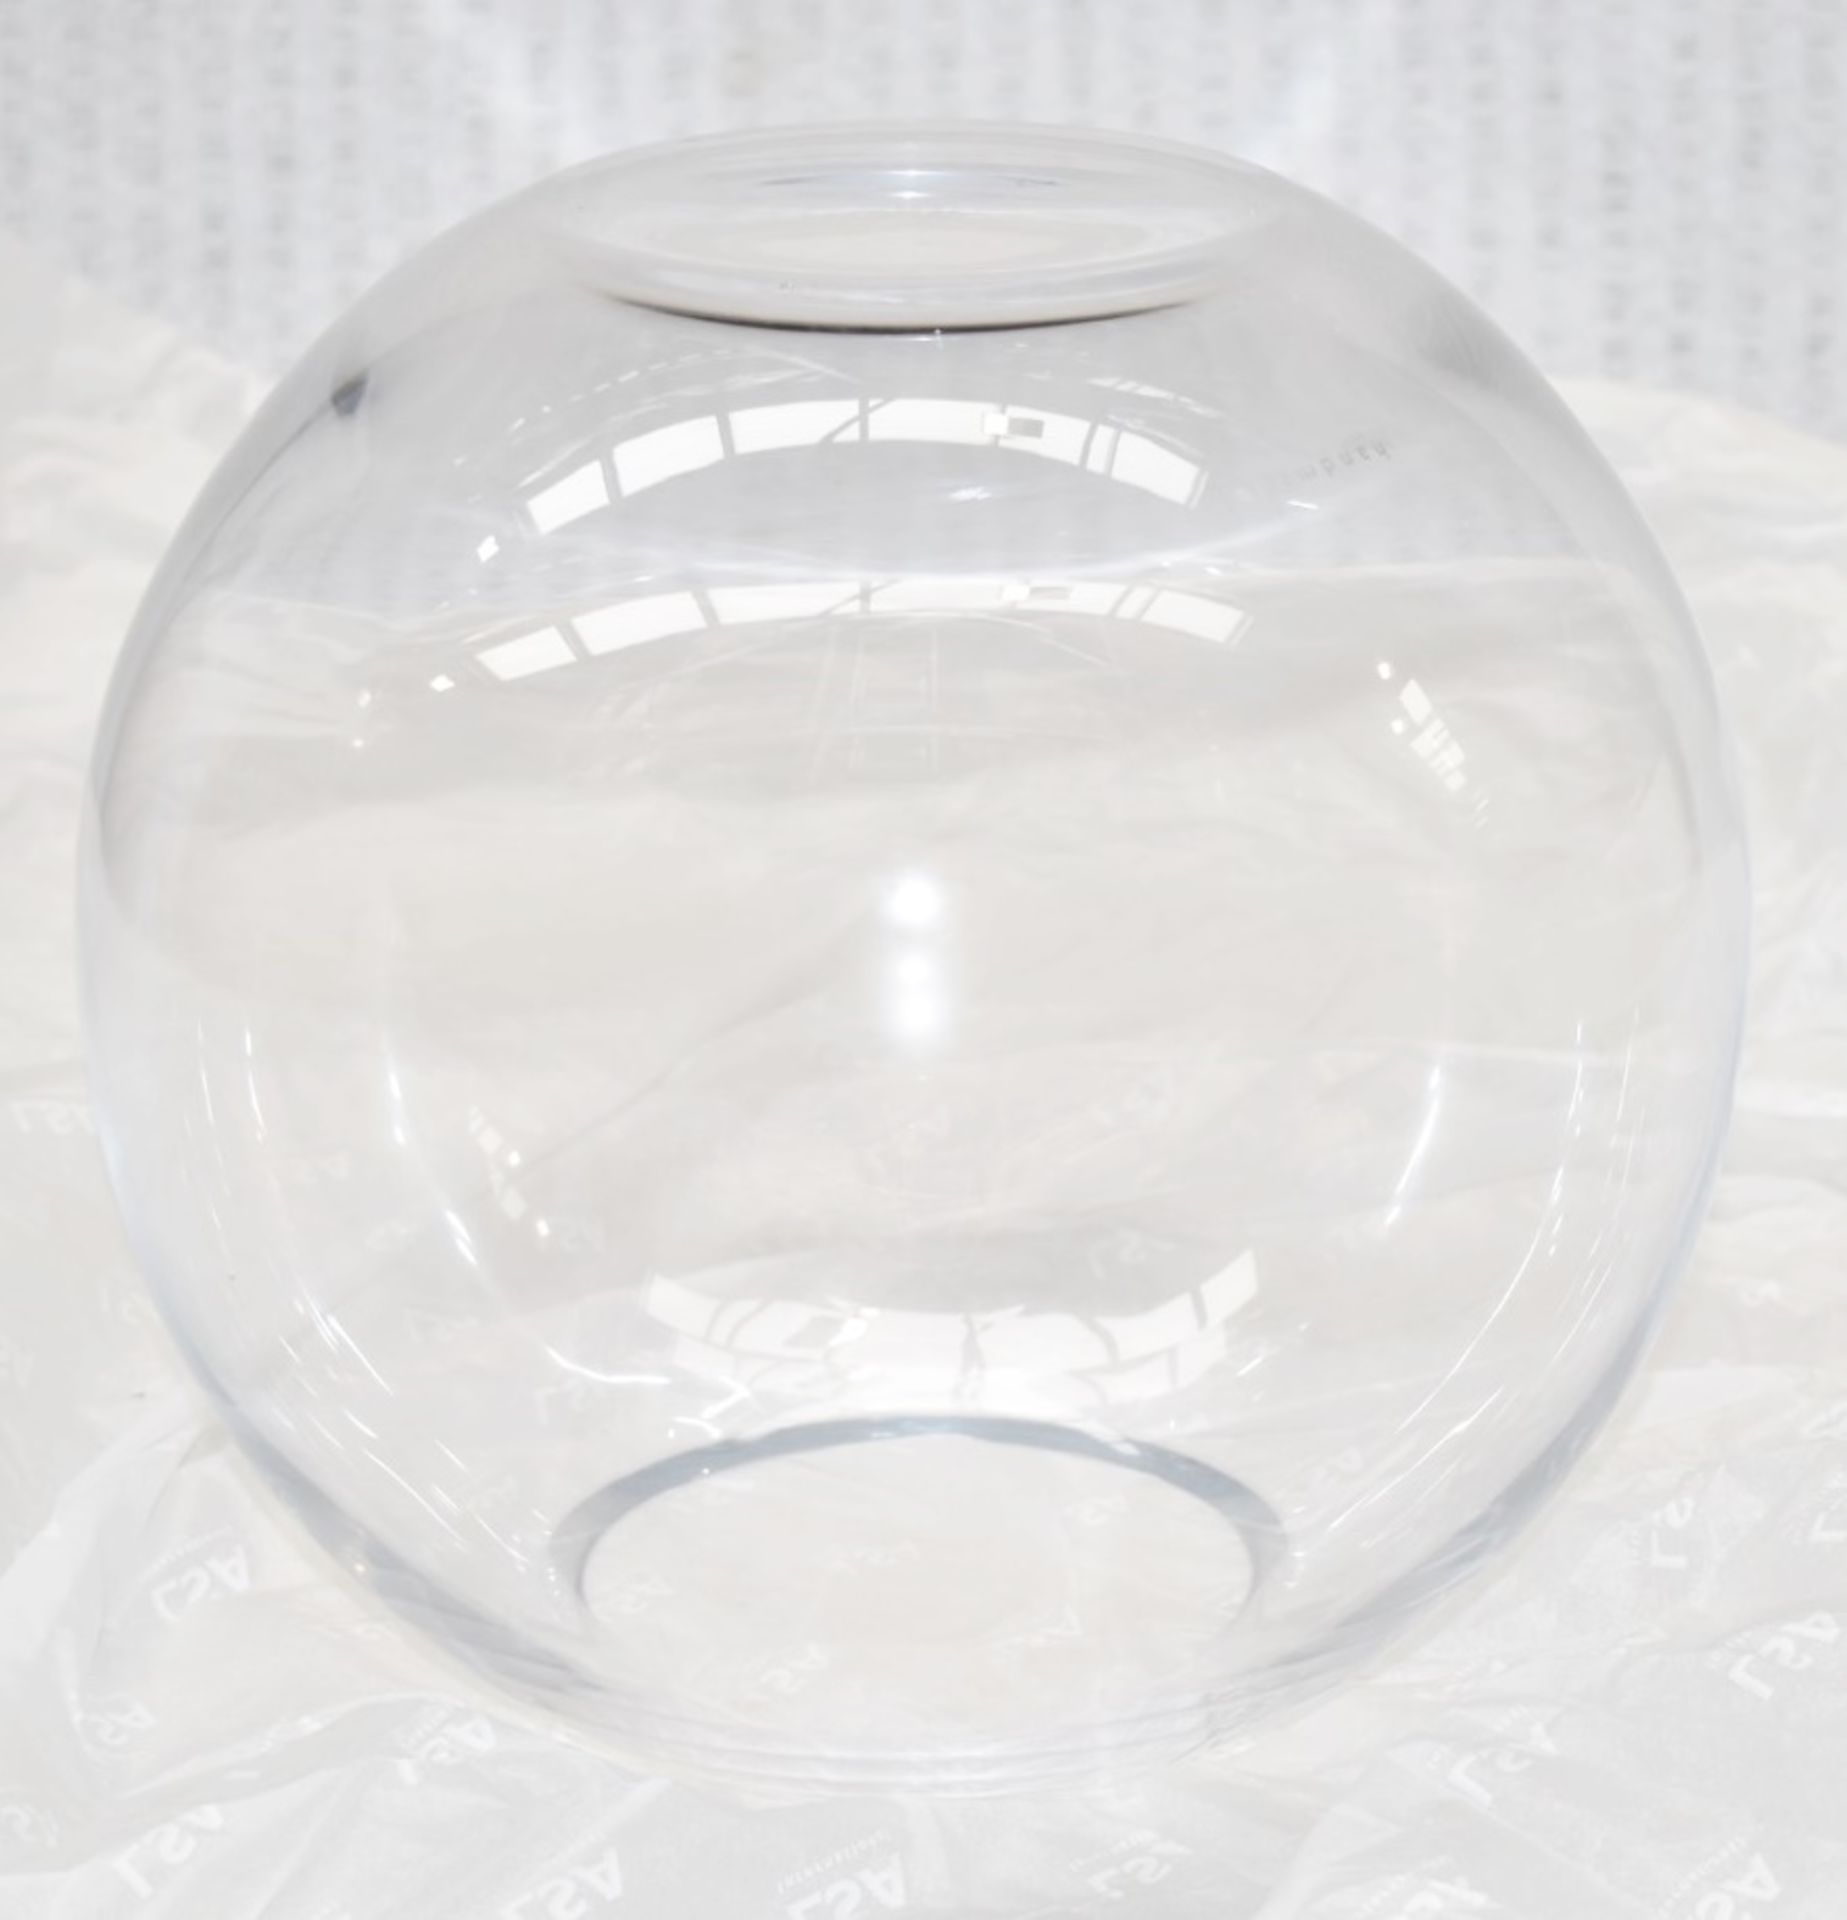 1 x LSA 'Globe' Luxury Mouthblown Glass Spherical Flower Vase, 24cm - Original Price £50.00 - Boxed - Image 4 of 4